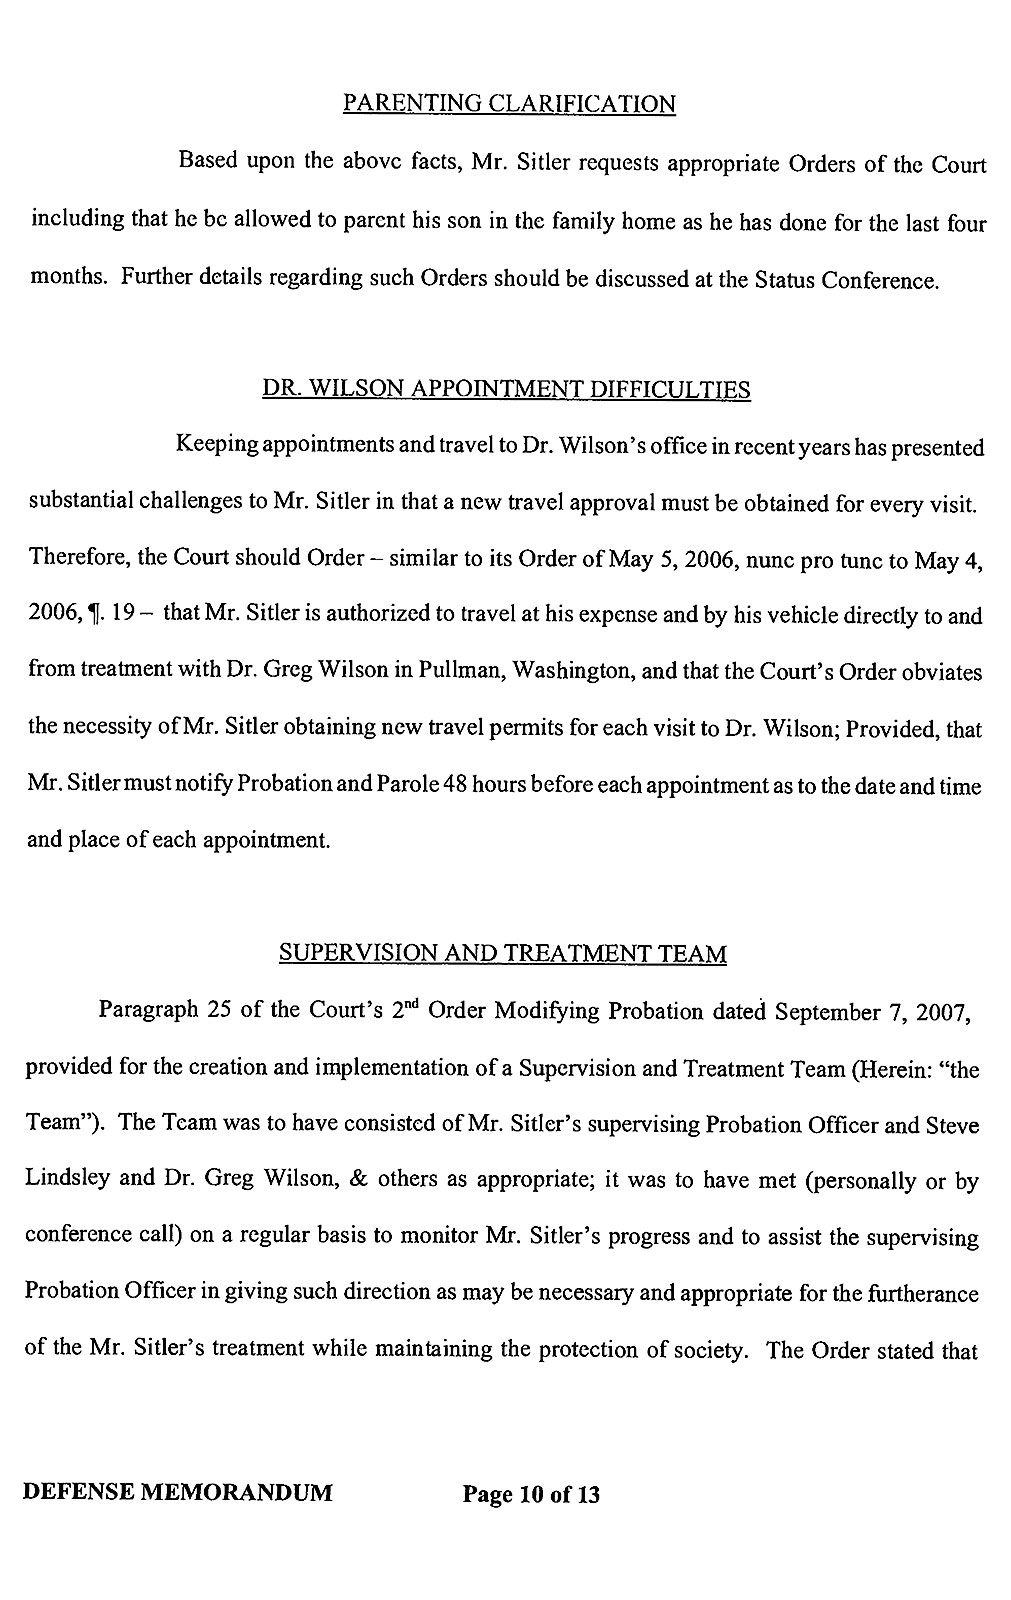 Steven Sitler Defense Memorandum, page 10